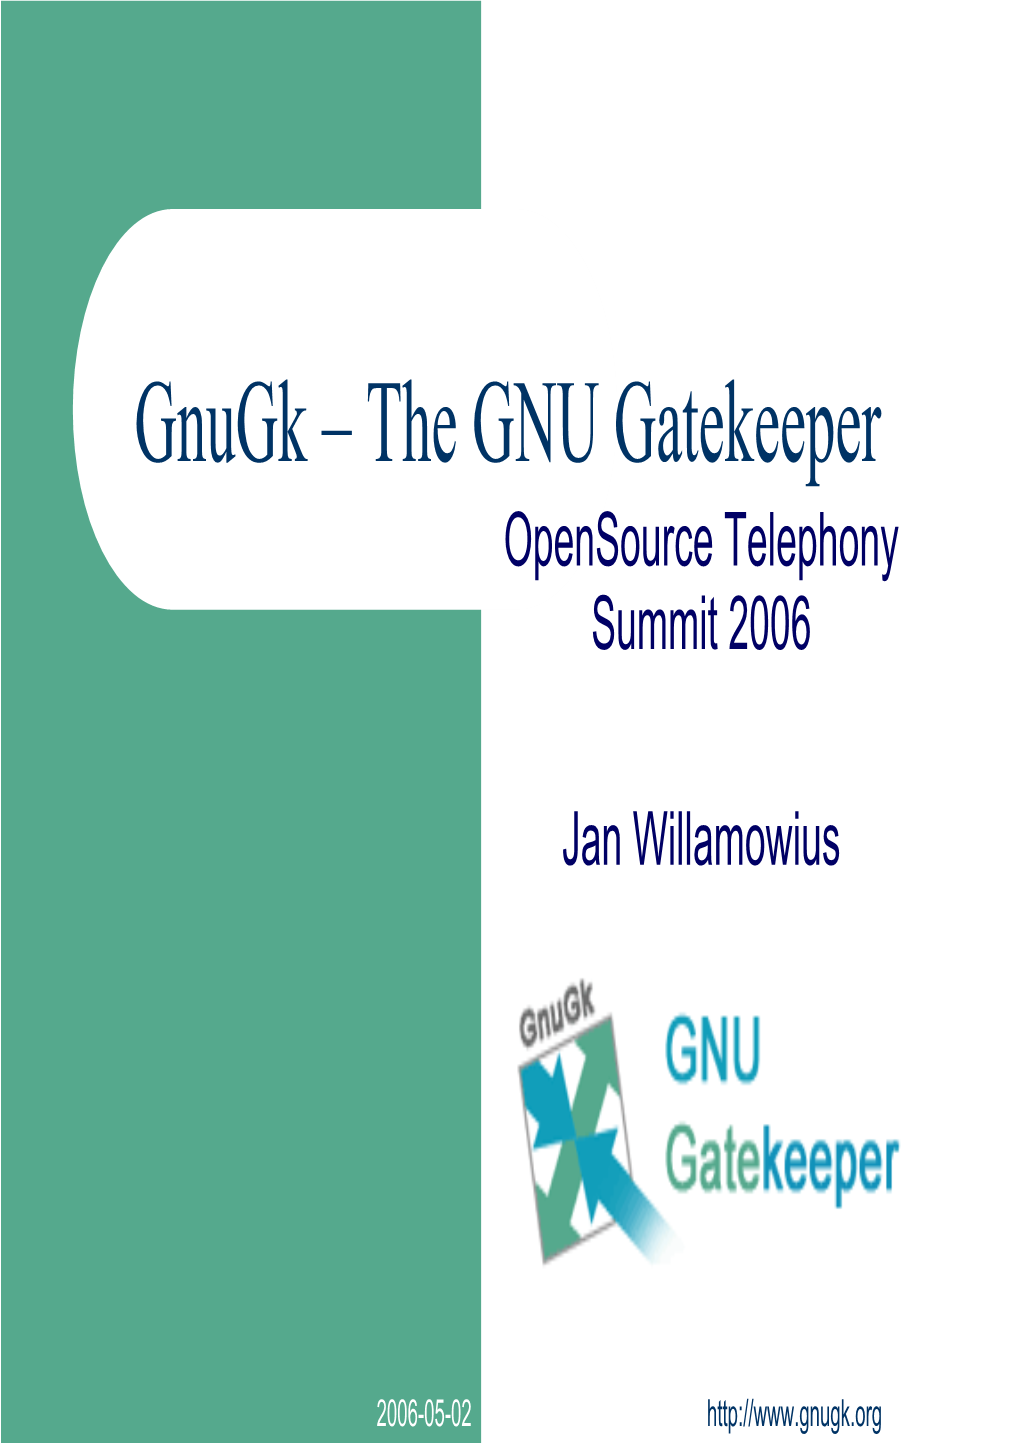 Gnugk – the GNU Gatekeeper Opensource Telephony Summit 2006